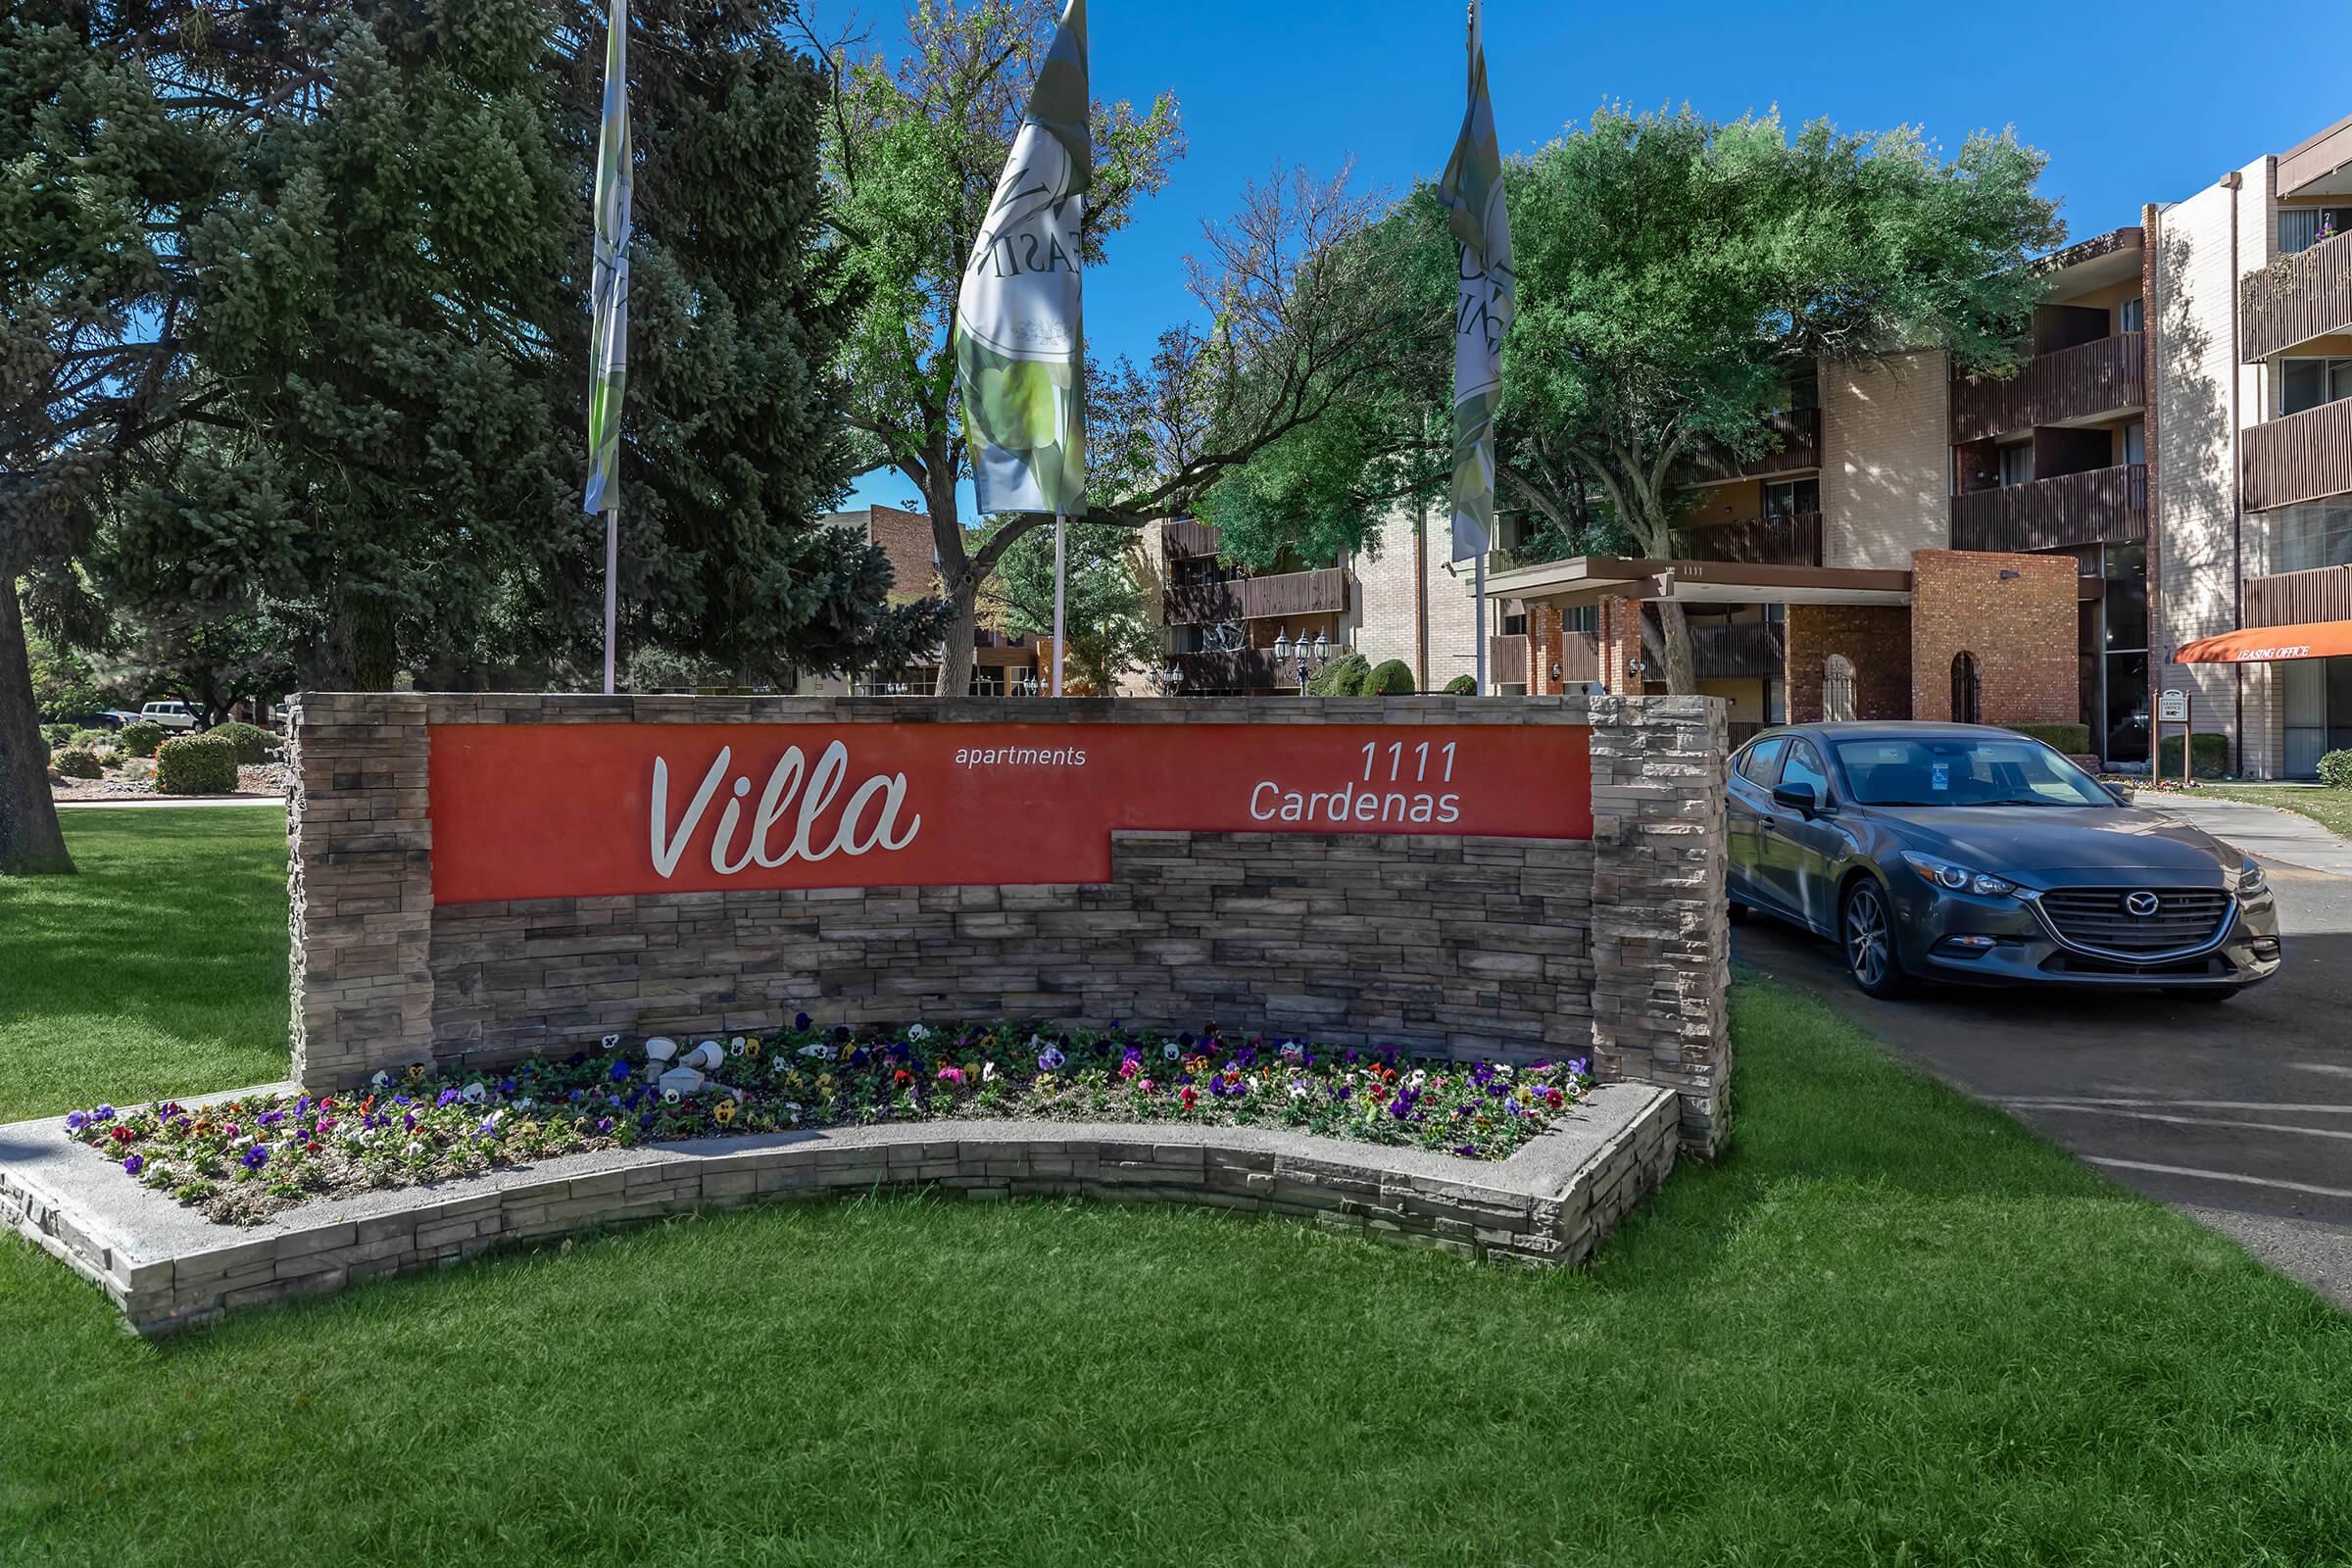 Villa Apartments monument sign